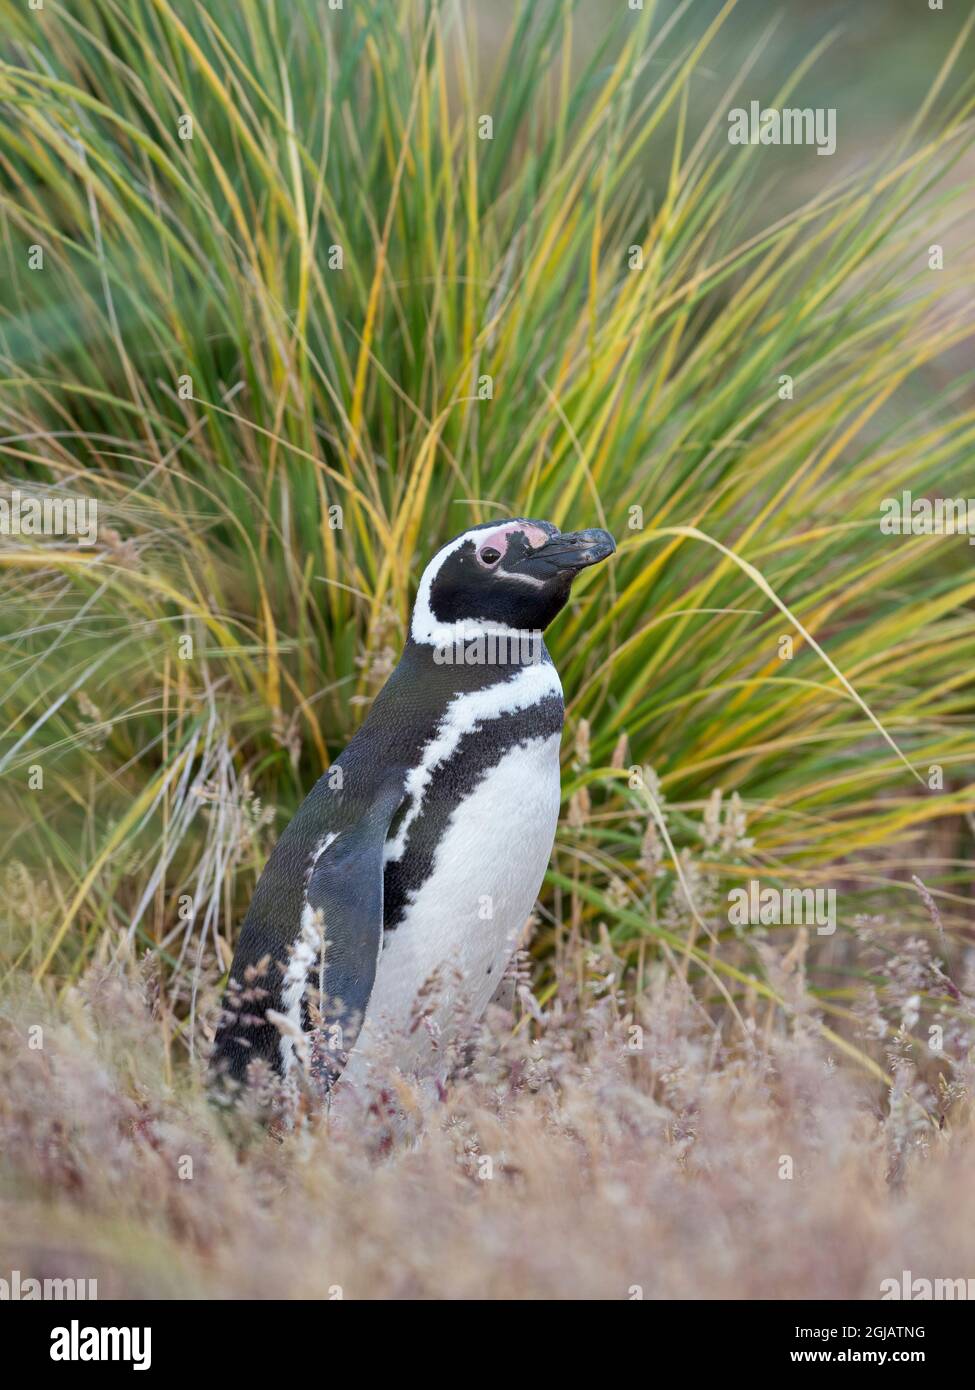 Magellanic Penguin breeding area in the tussock belt, the natural vegetation on Subantarctic islands in South America, Falkland Islands. Stock Photo